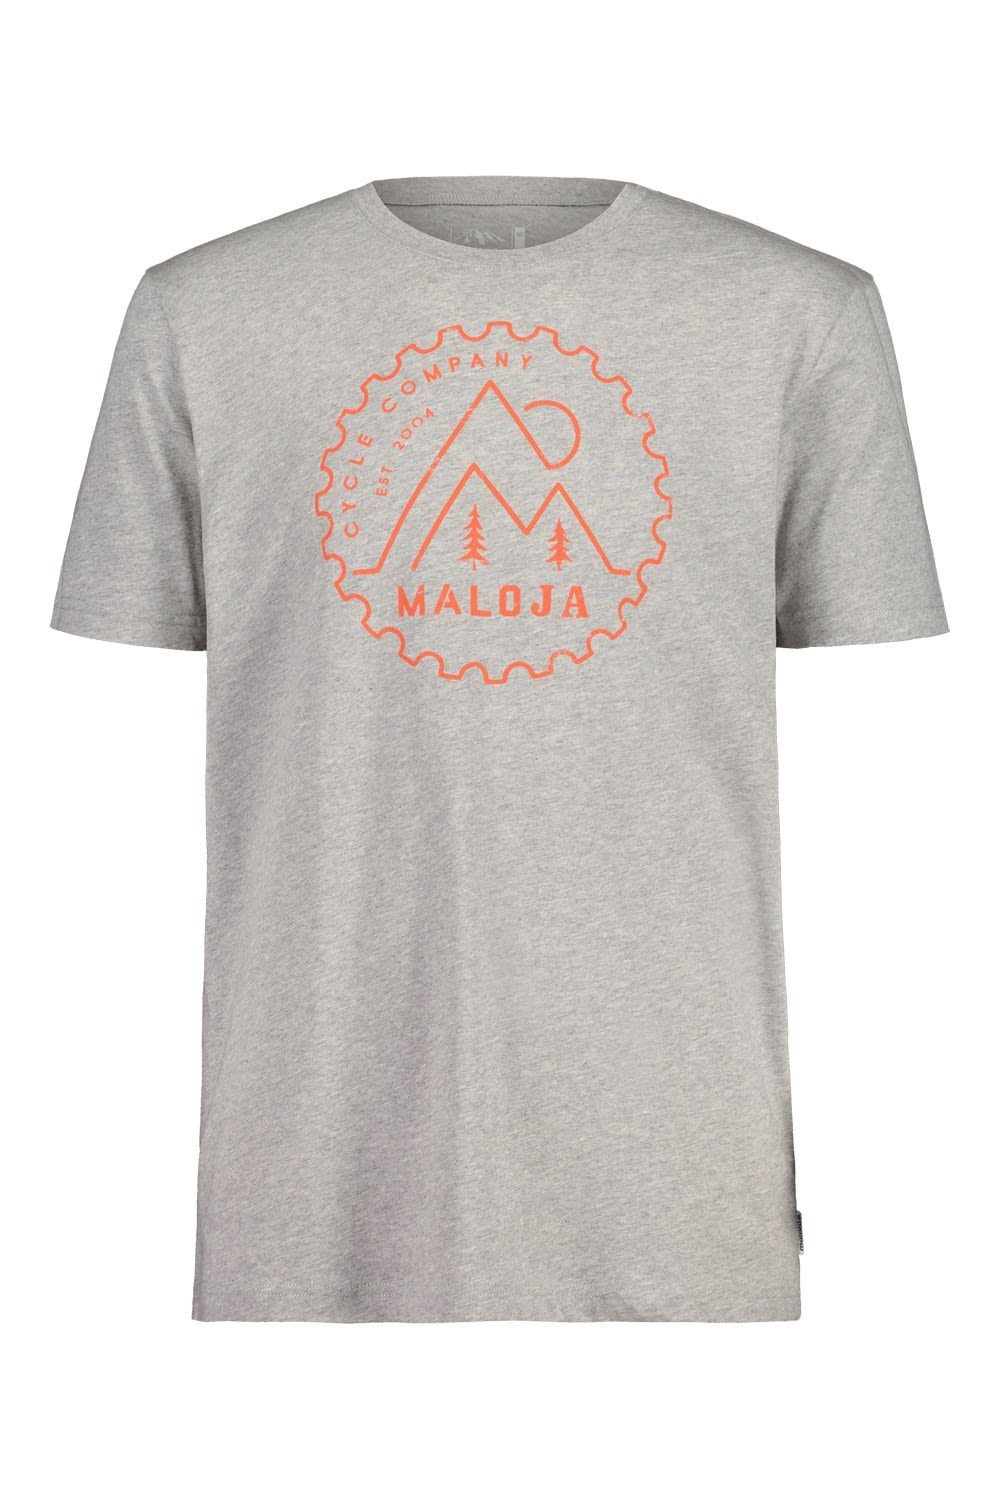 Maloja T-Shirt Maloja M Portlam. T-shirt Herren Kurzarm-Shirt Grey Melange